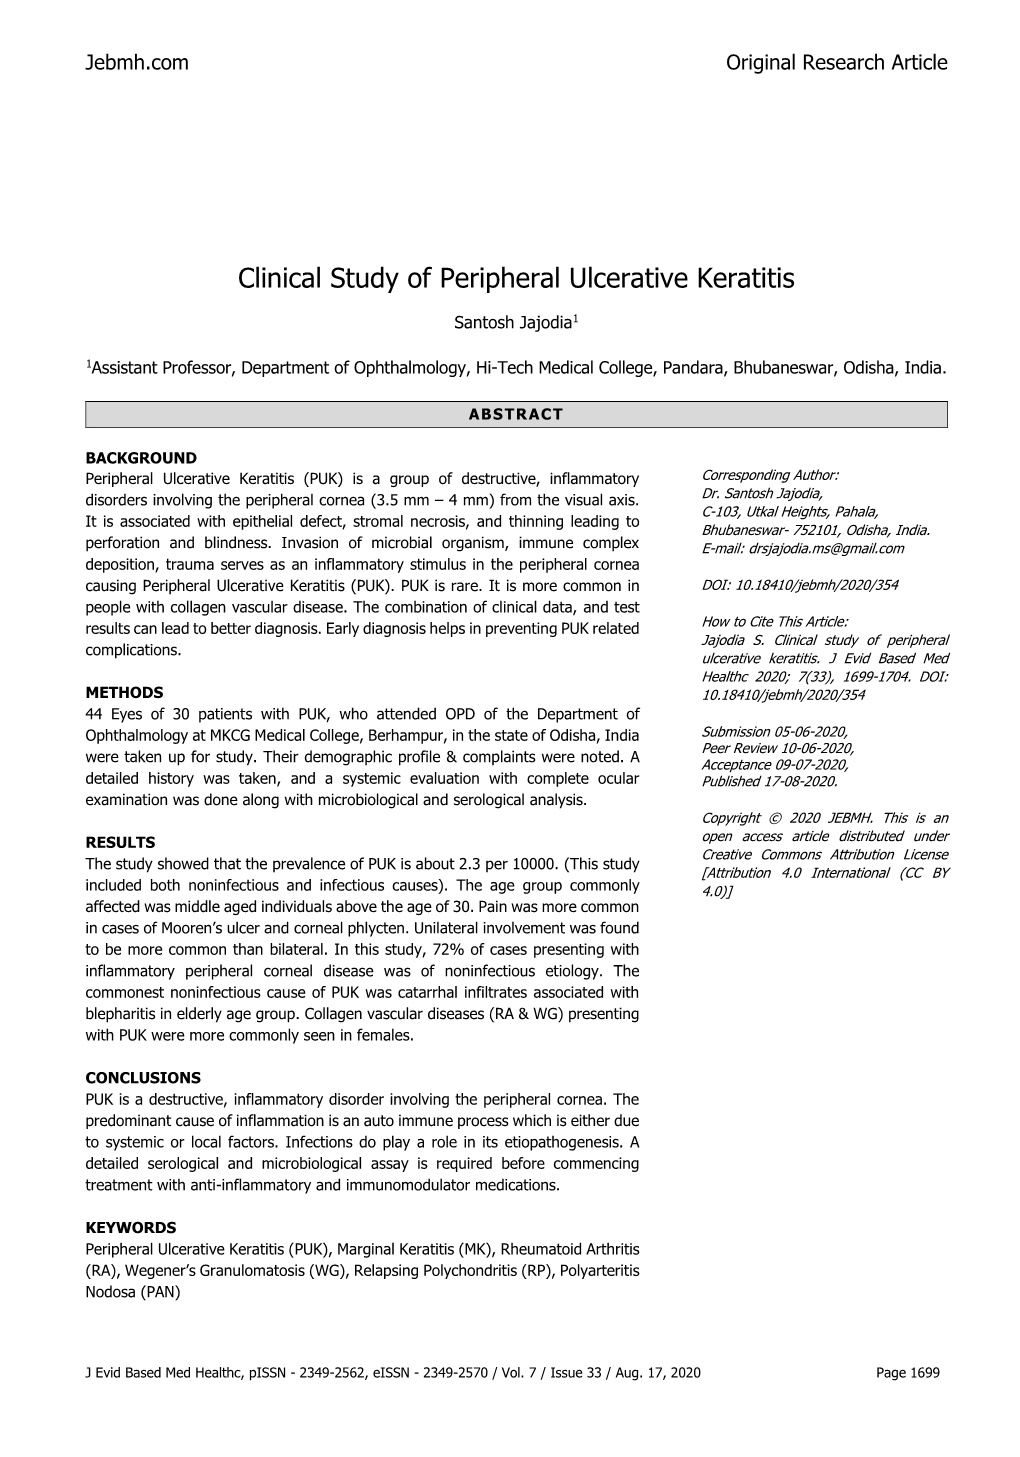 Clinical Study of Peripheral Ulcerative Keratitis